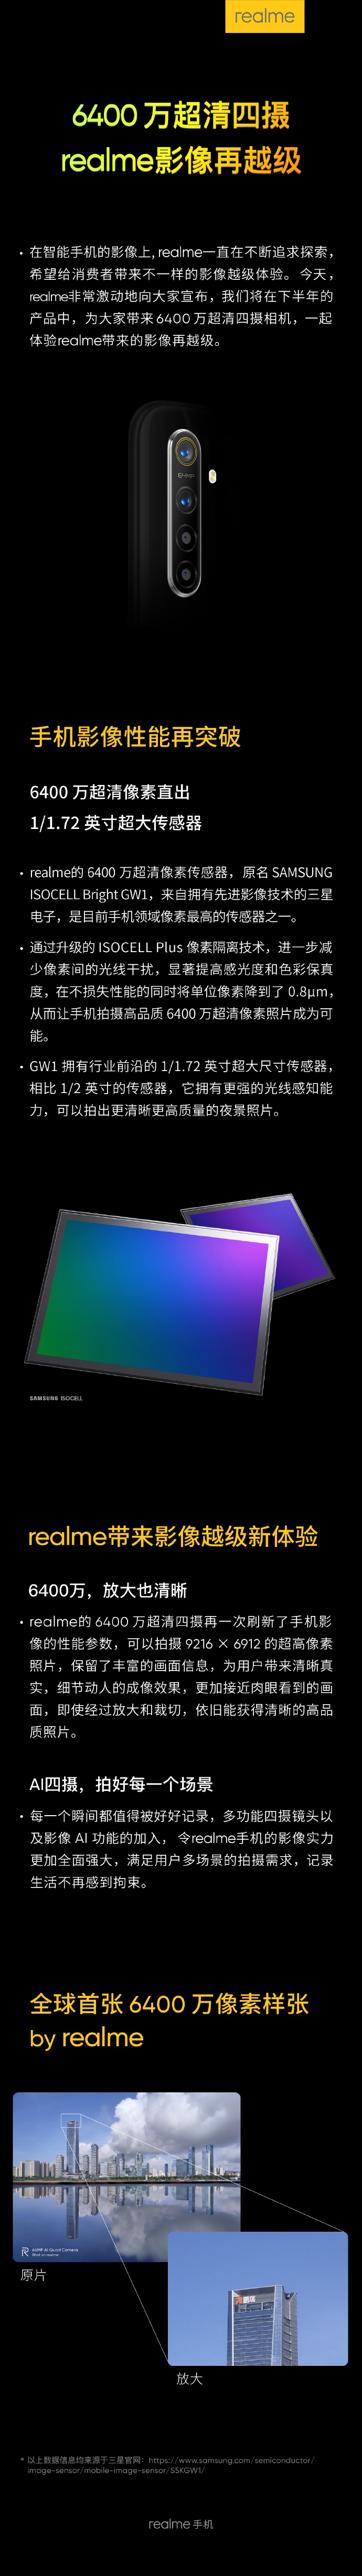 The Realme teaser for a "quad-cam 64MP" phone. (Source: Weibo)